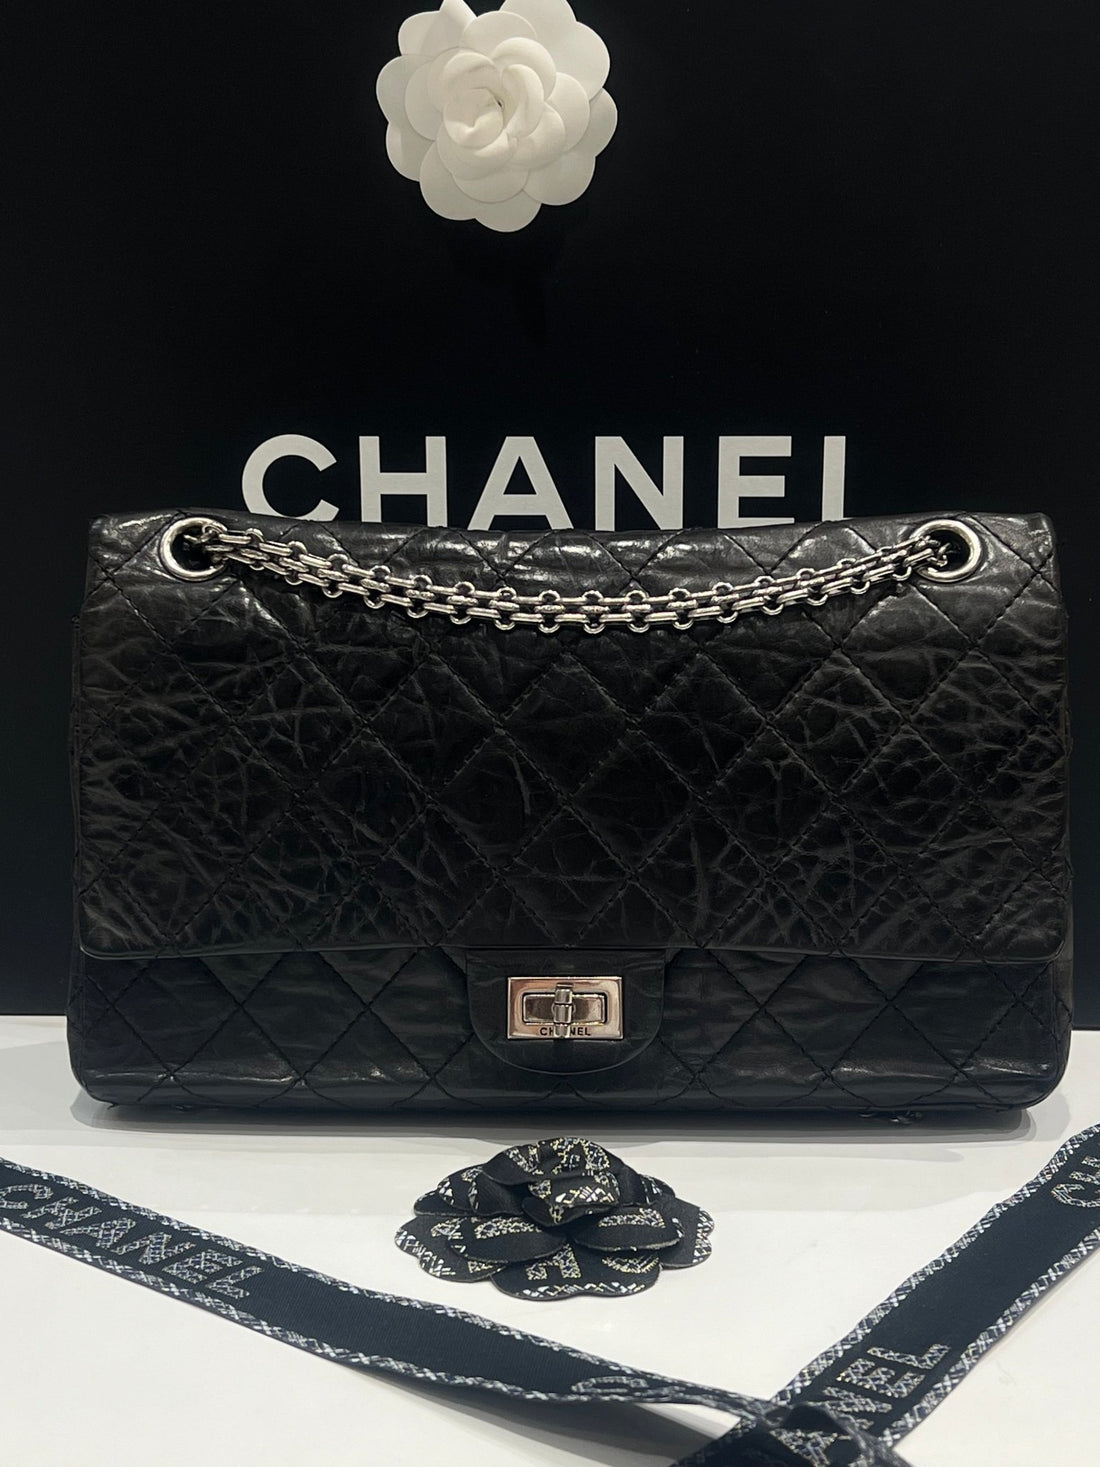 Chanel - sac 2 55 grand modèle 226 cuir vieilli noir - Les Folies d&